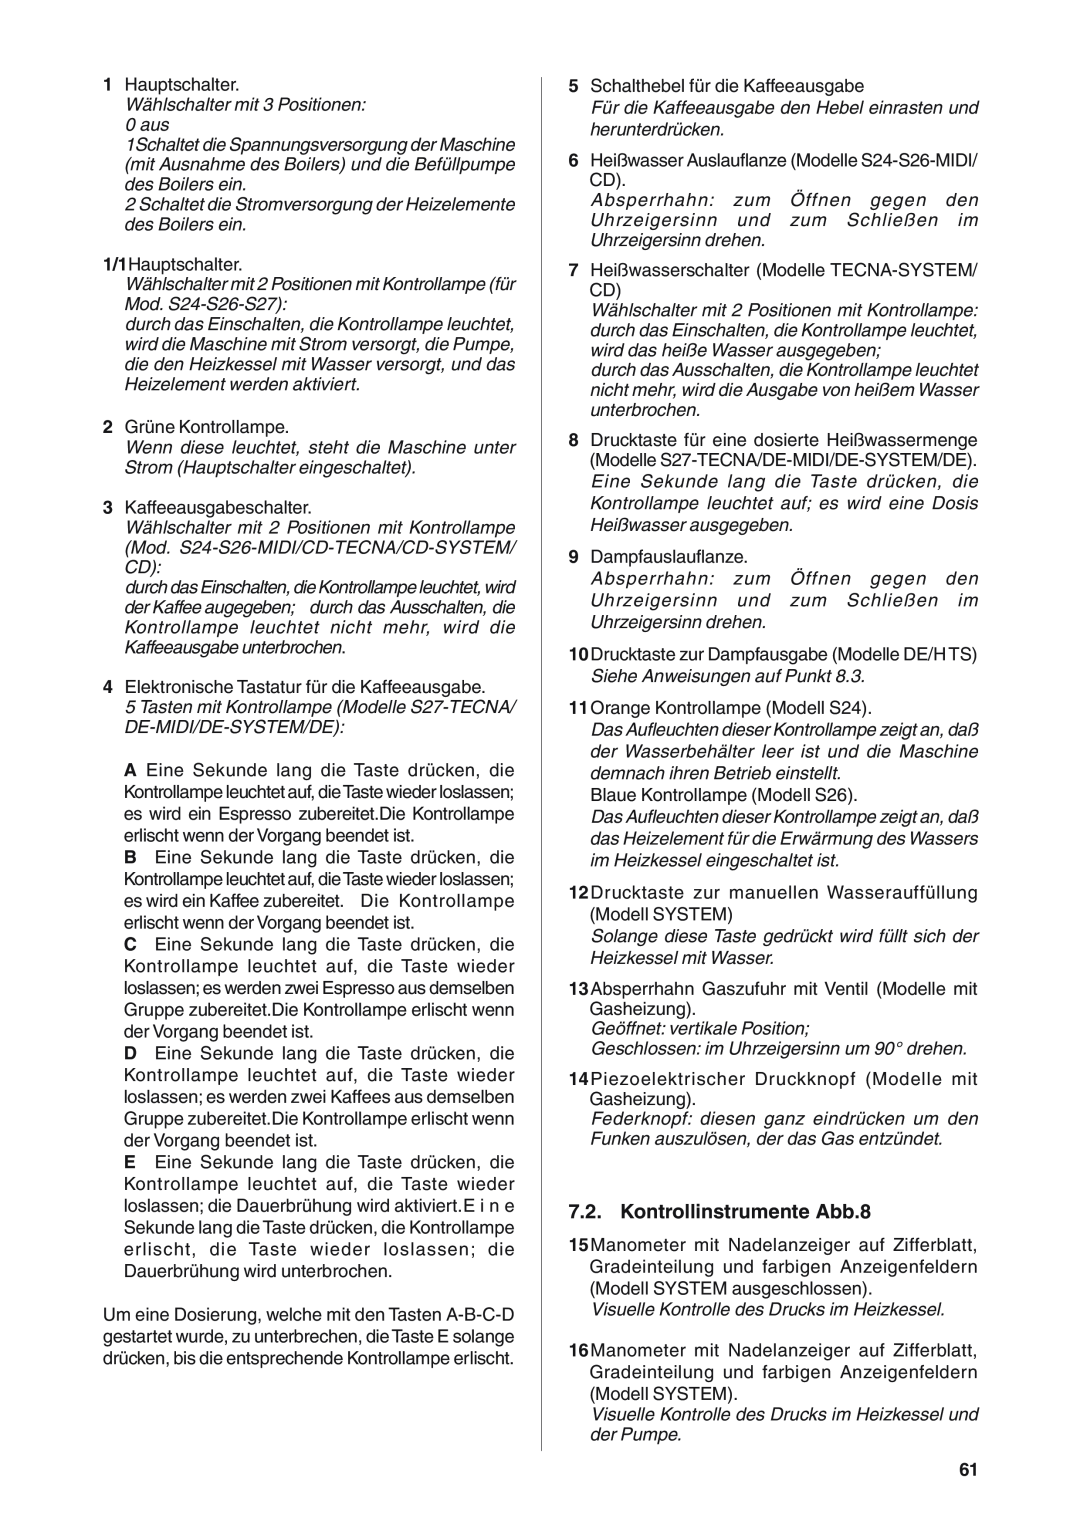 Rancilio S20 manual Kontrollinstrumente Abb.8 